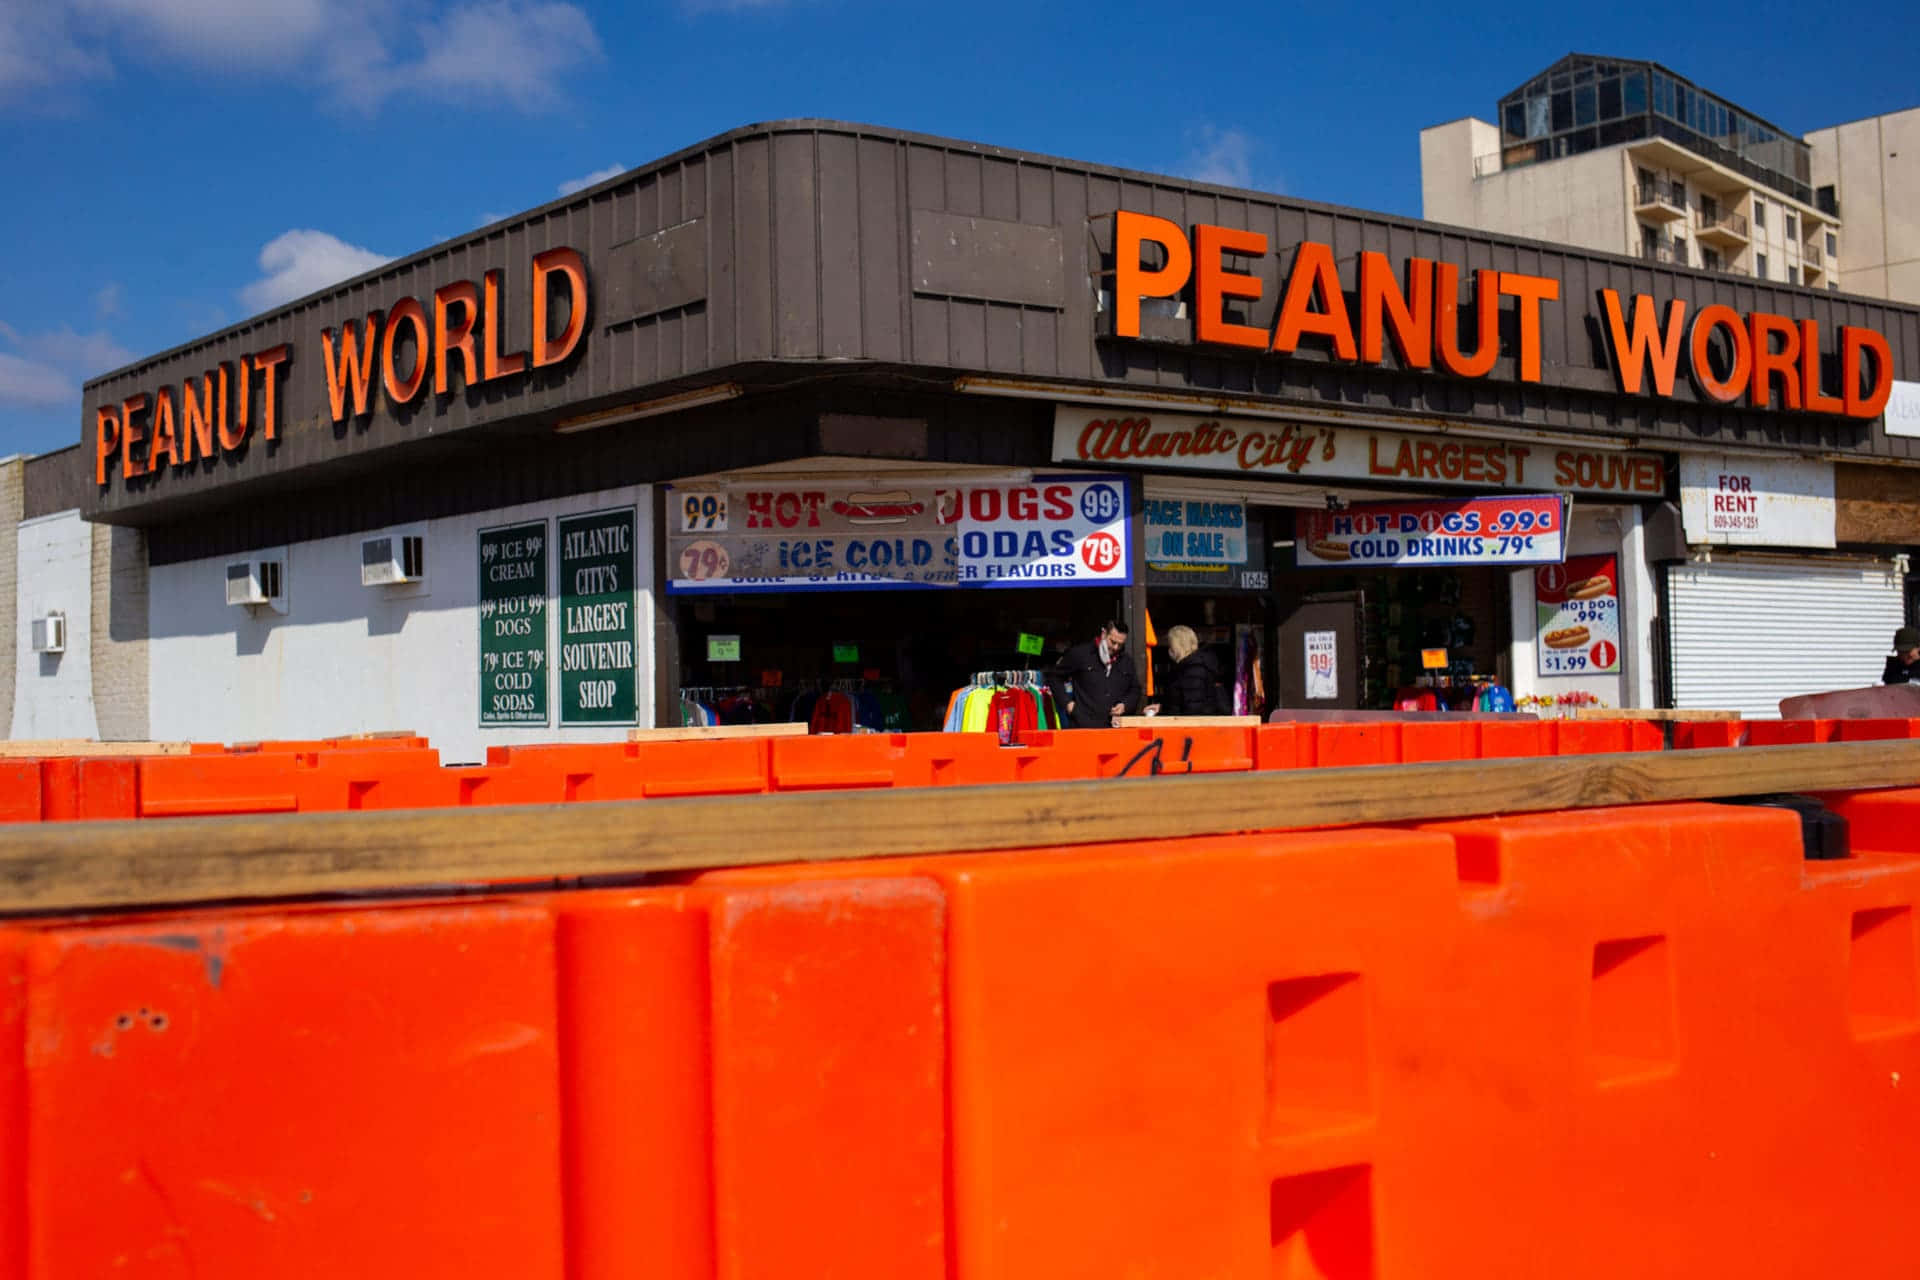 Imagende Atlantic City Peanut World